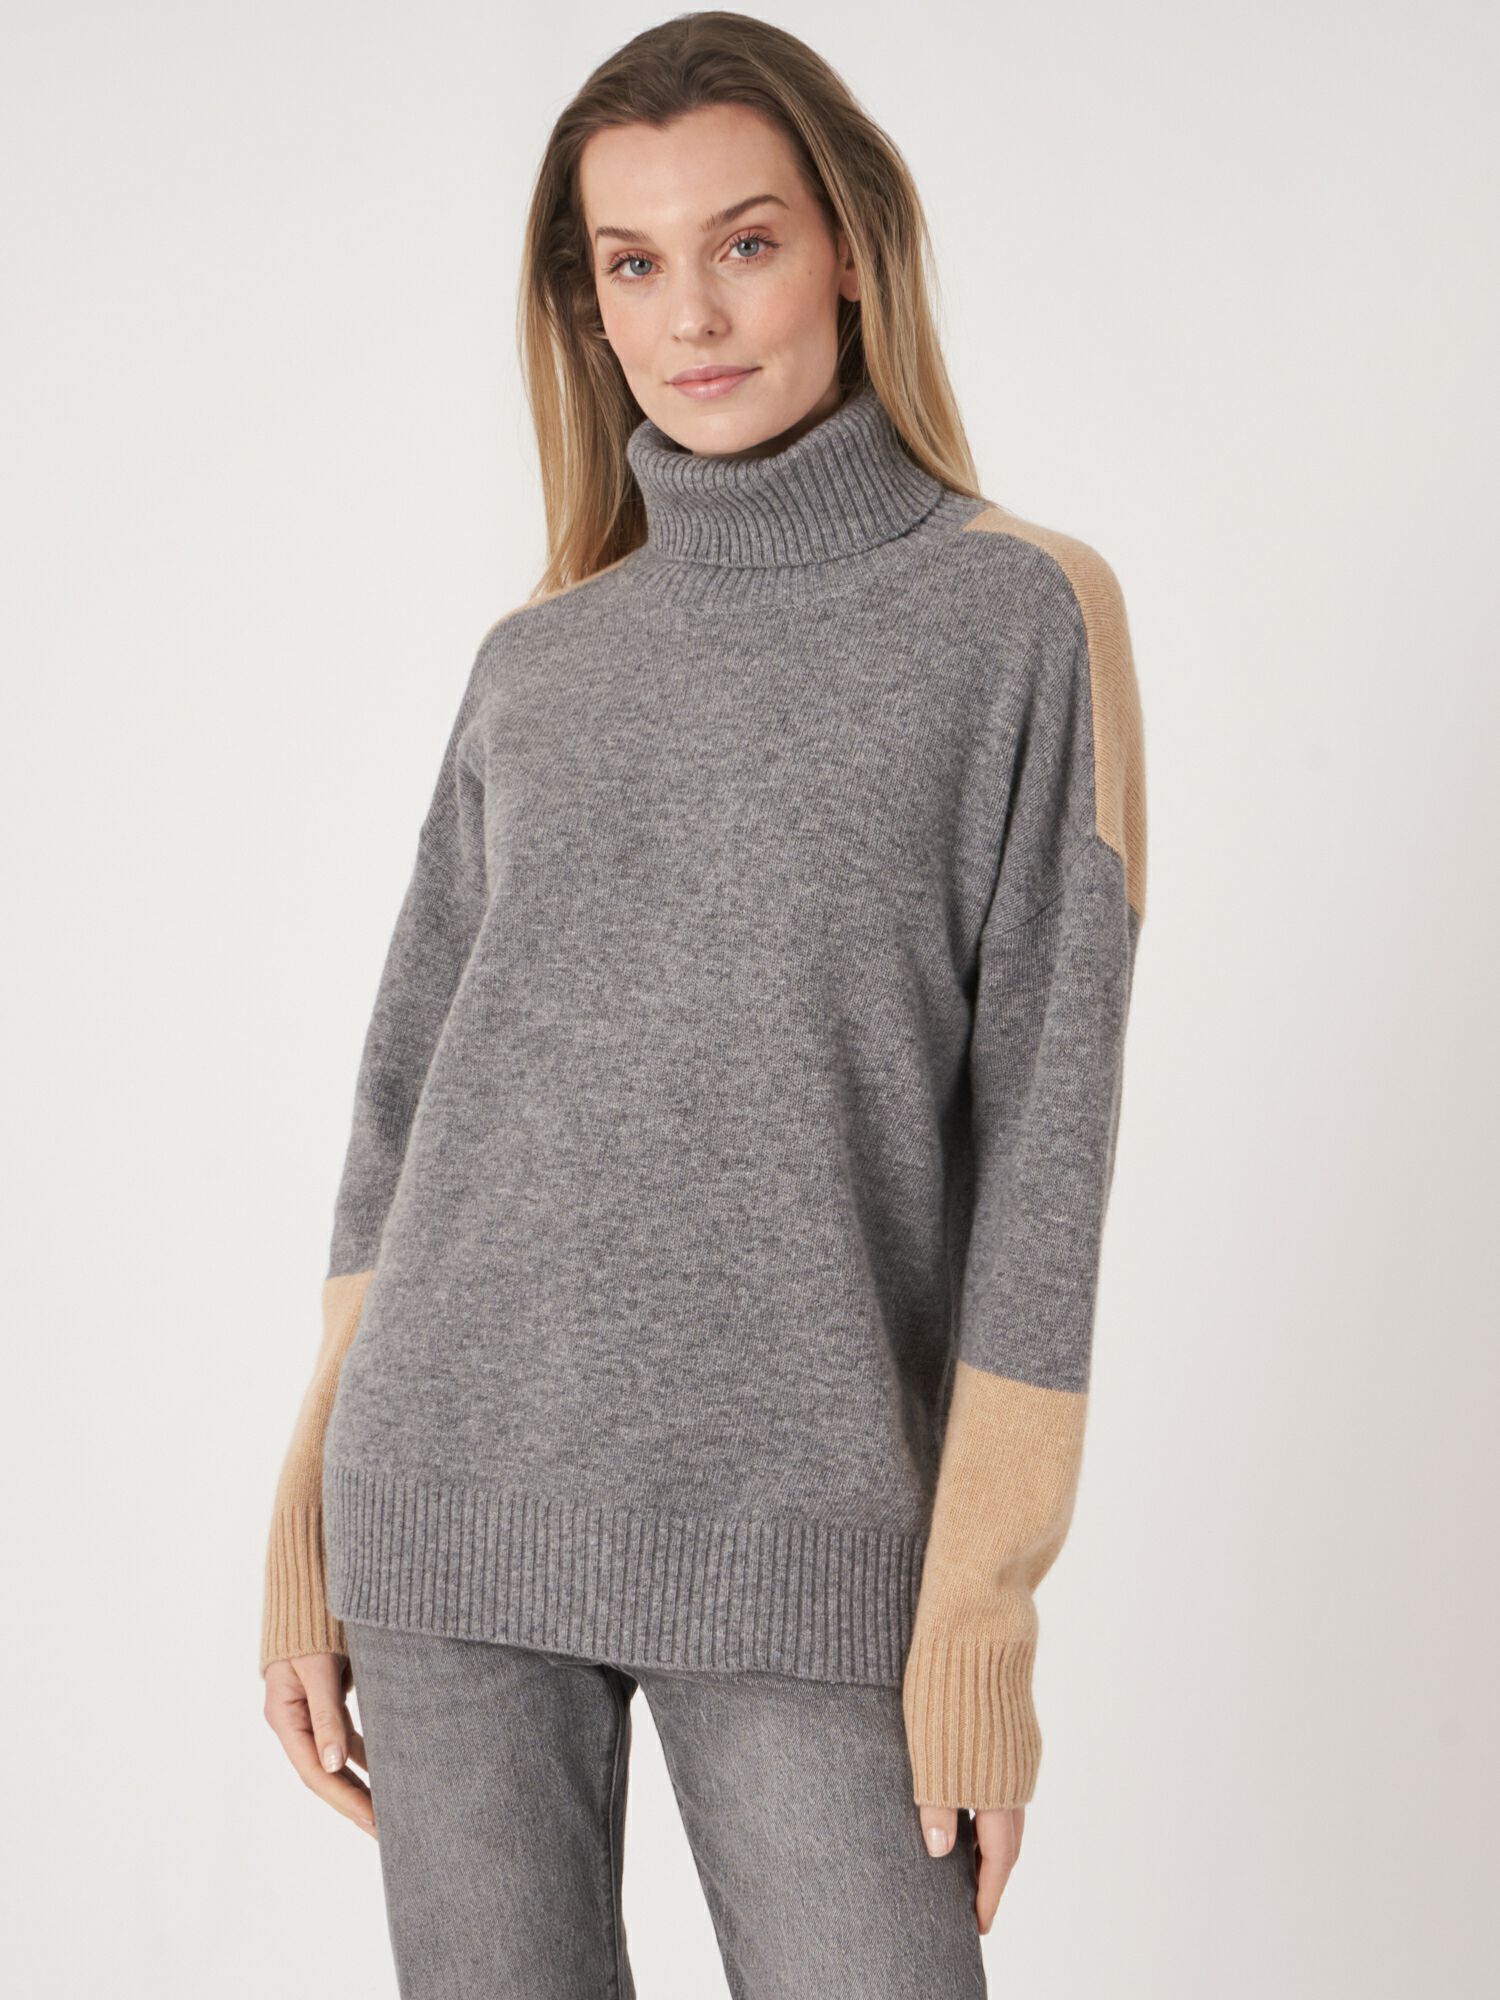 Two tone color block turtleneck sweater